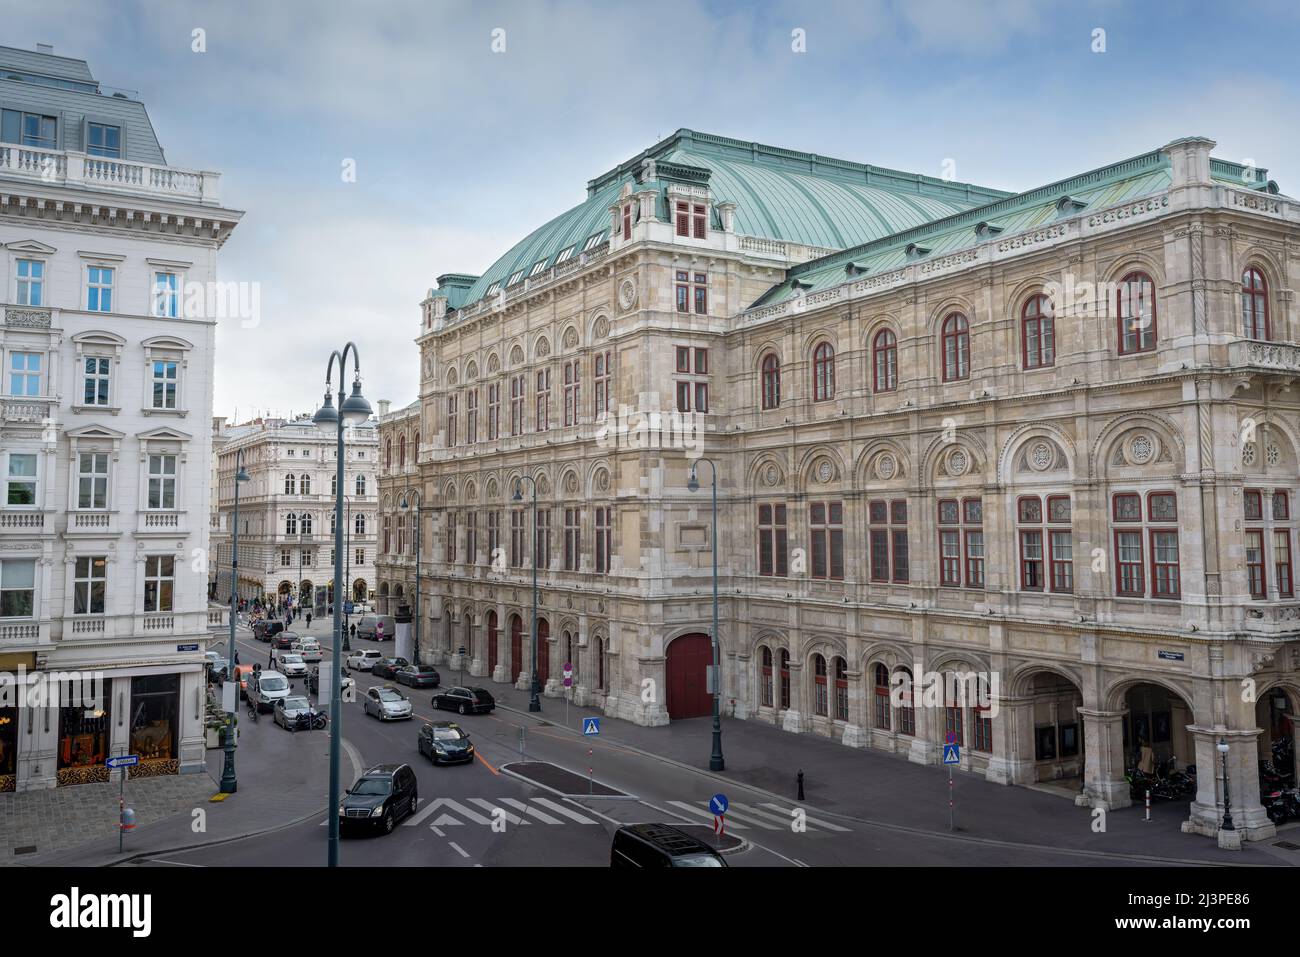 Opéra d'Etat de Vienne (Wiener Staatsoper) et Albertinaplatz - Vienne, Autriche Banque D'Images